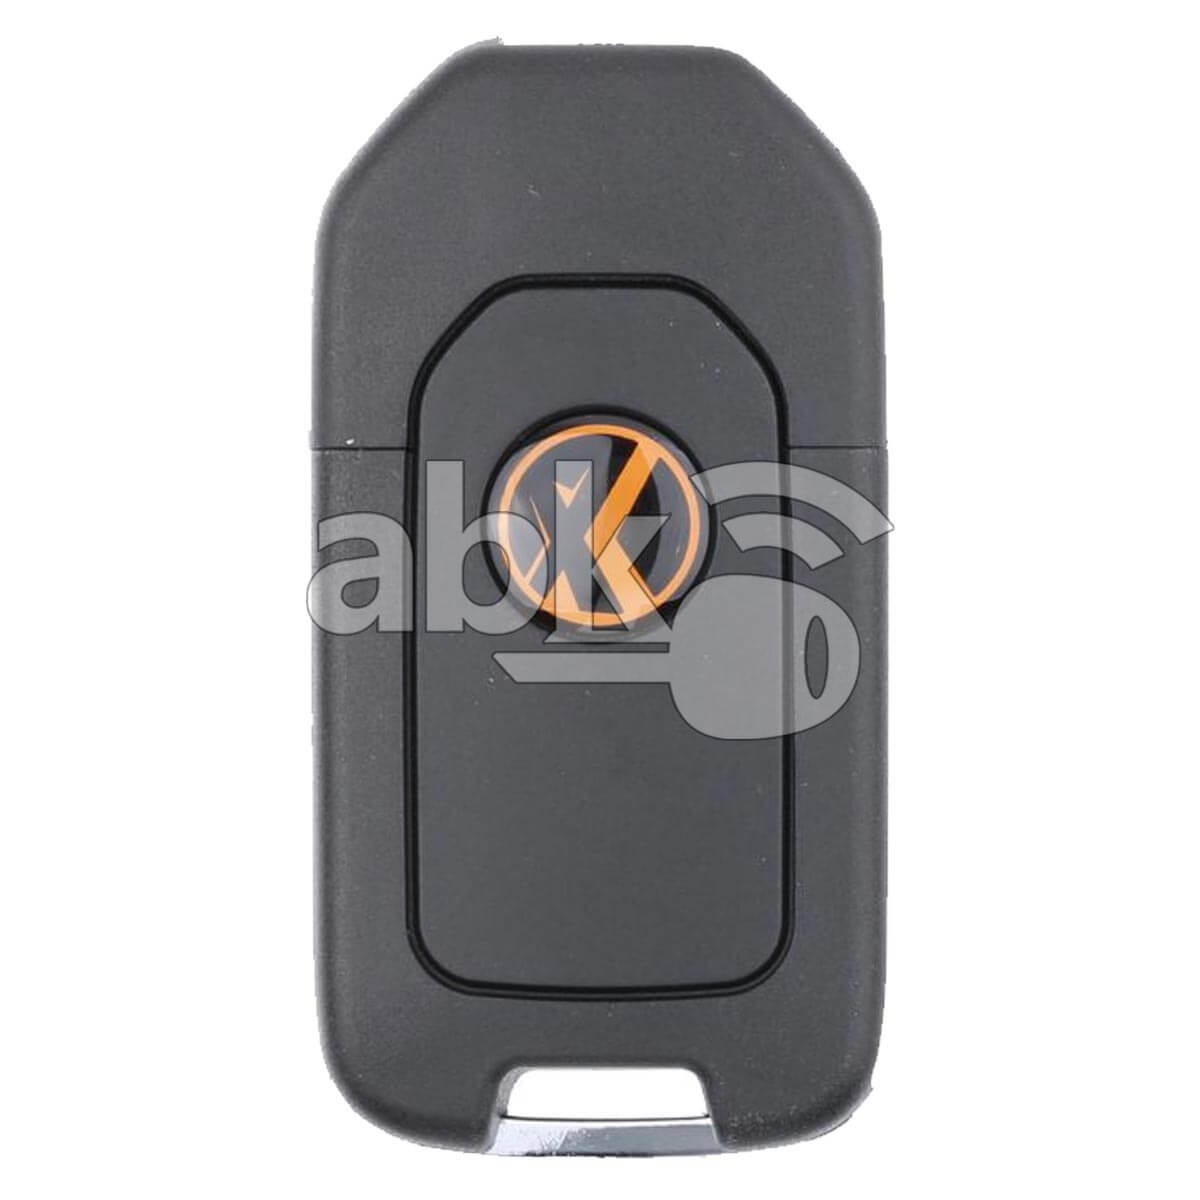 Xhorse VVDI Key Tool VVDI2 Honda Style Wired Flip Remote 3Buttons XKHO00EN - ABK-1015-XKHO00EN - 